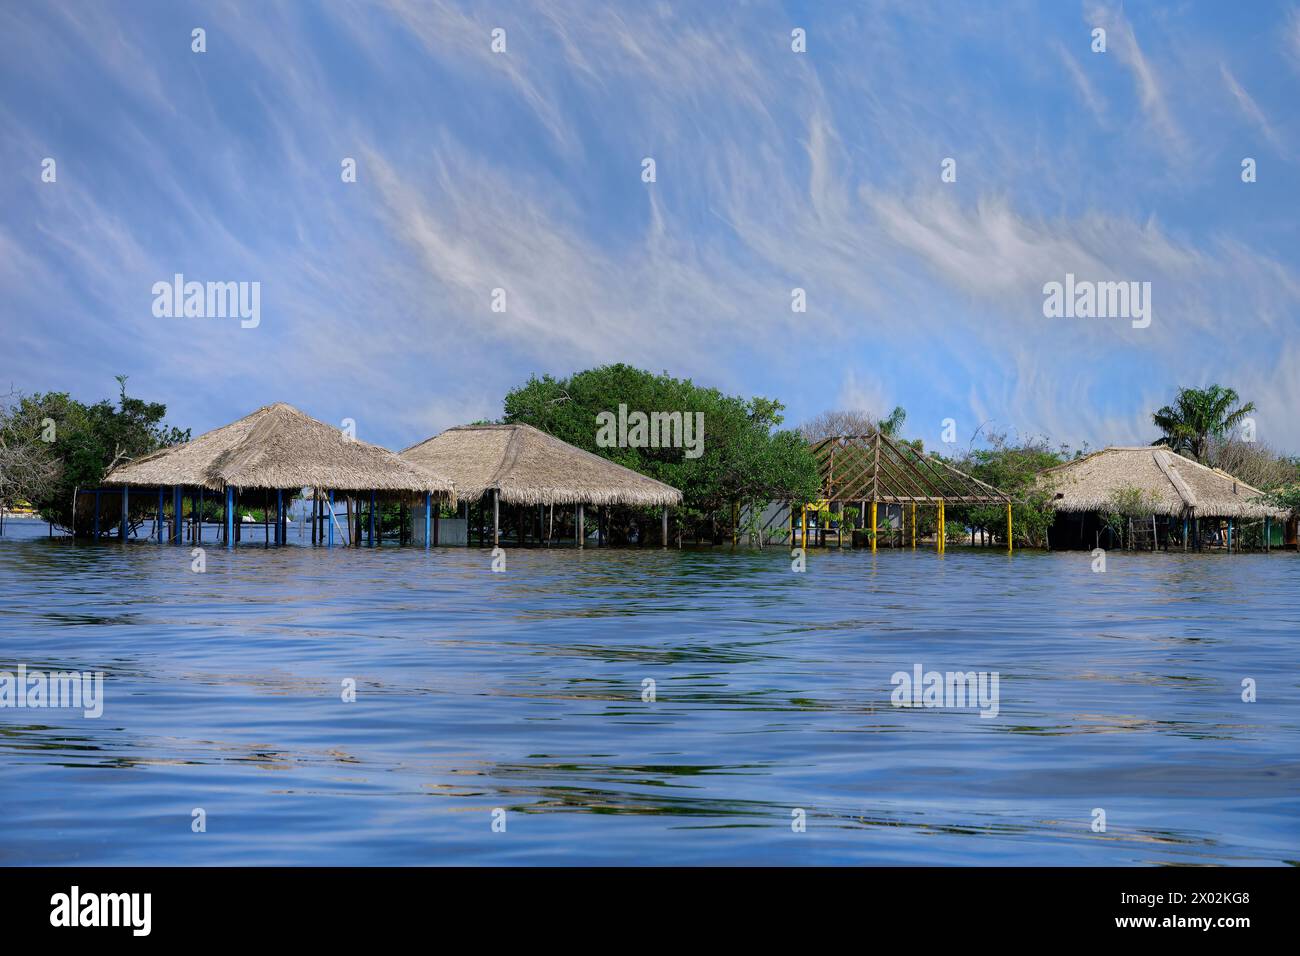 Flooded beach huts, Alter do Chao Beach, Tapajos River, Para state, Brazil, South America Stock Photo